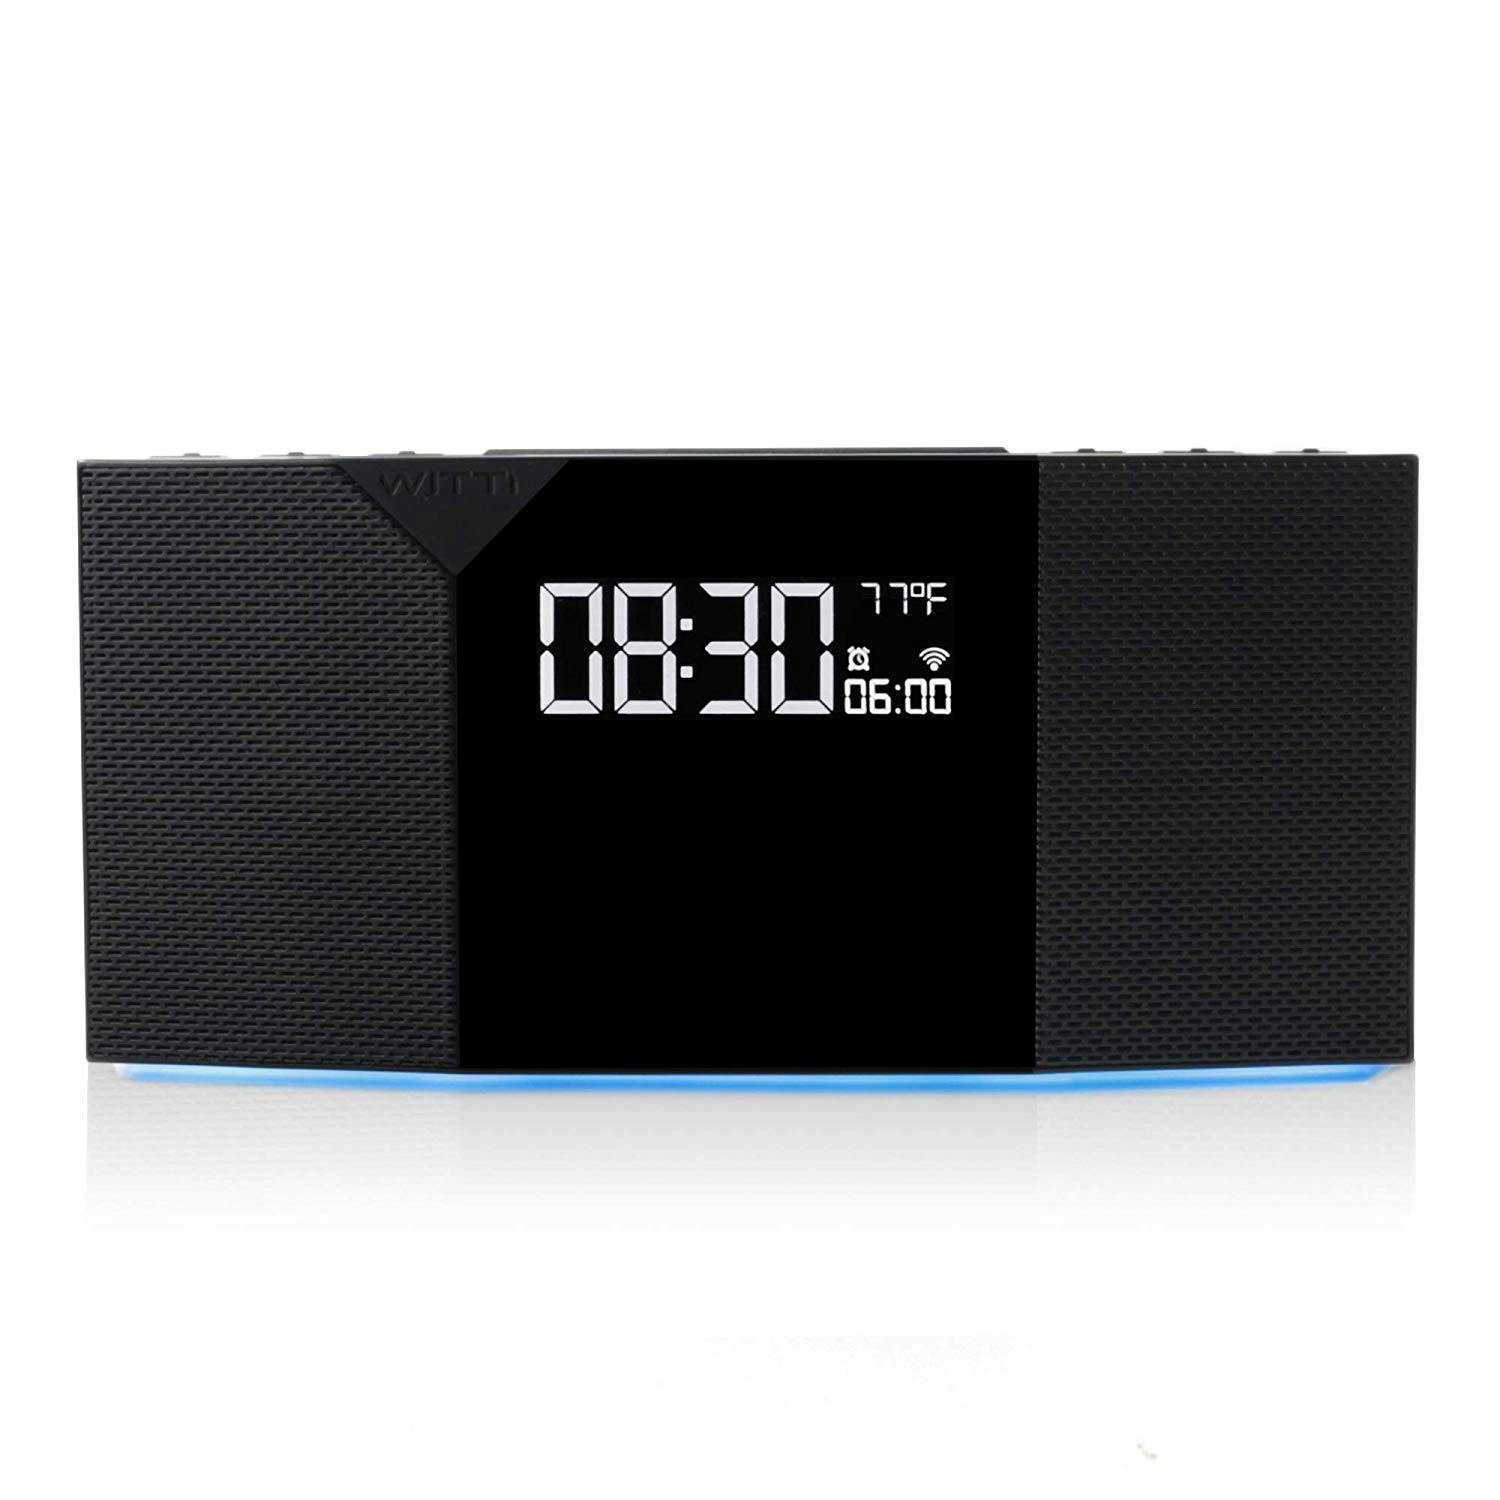 Witti Beddi 2 smart alarm clock